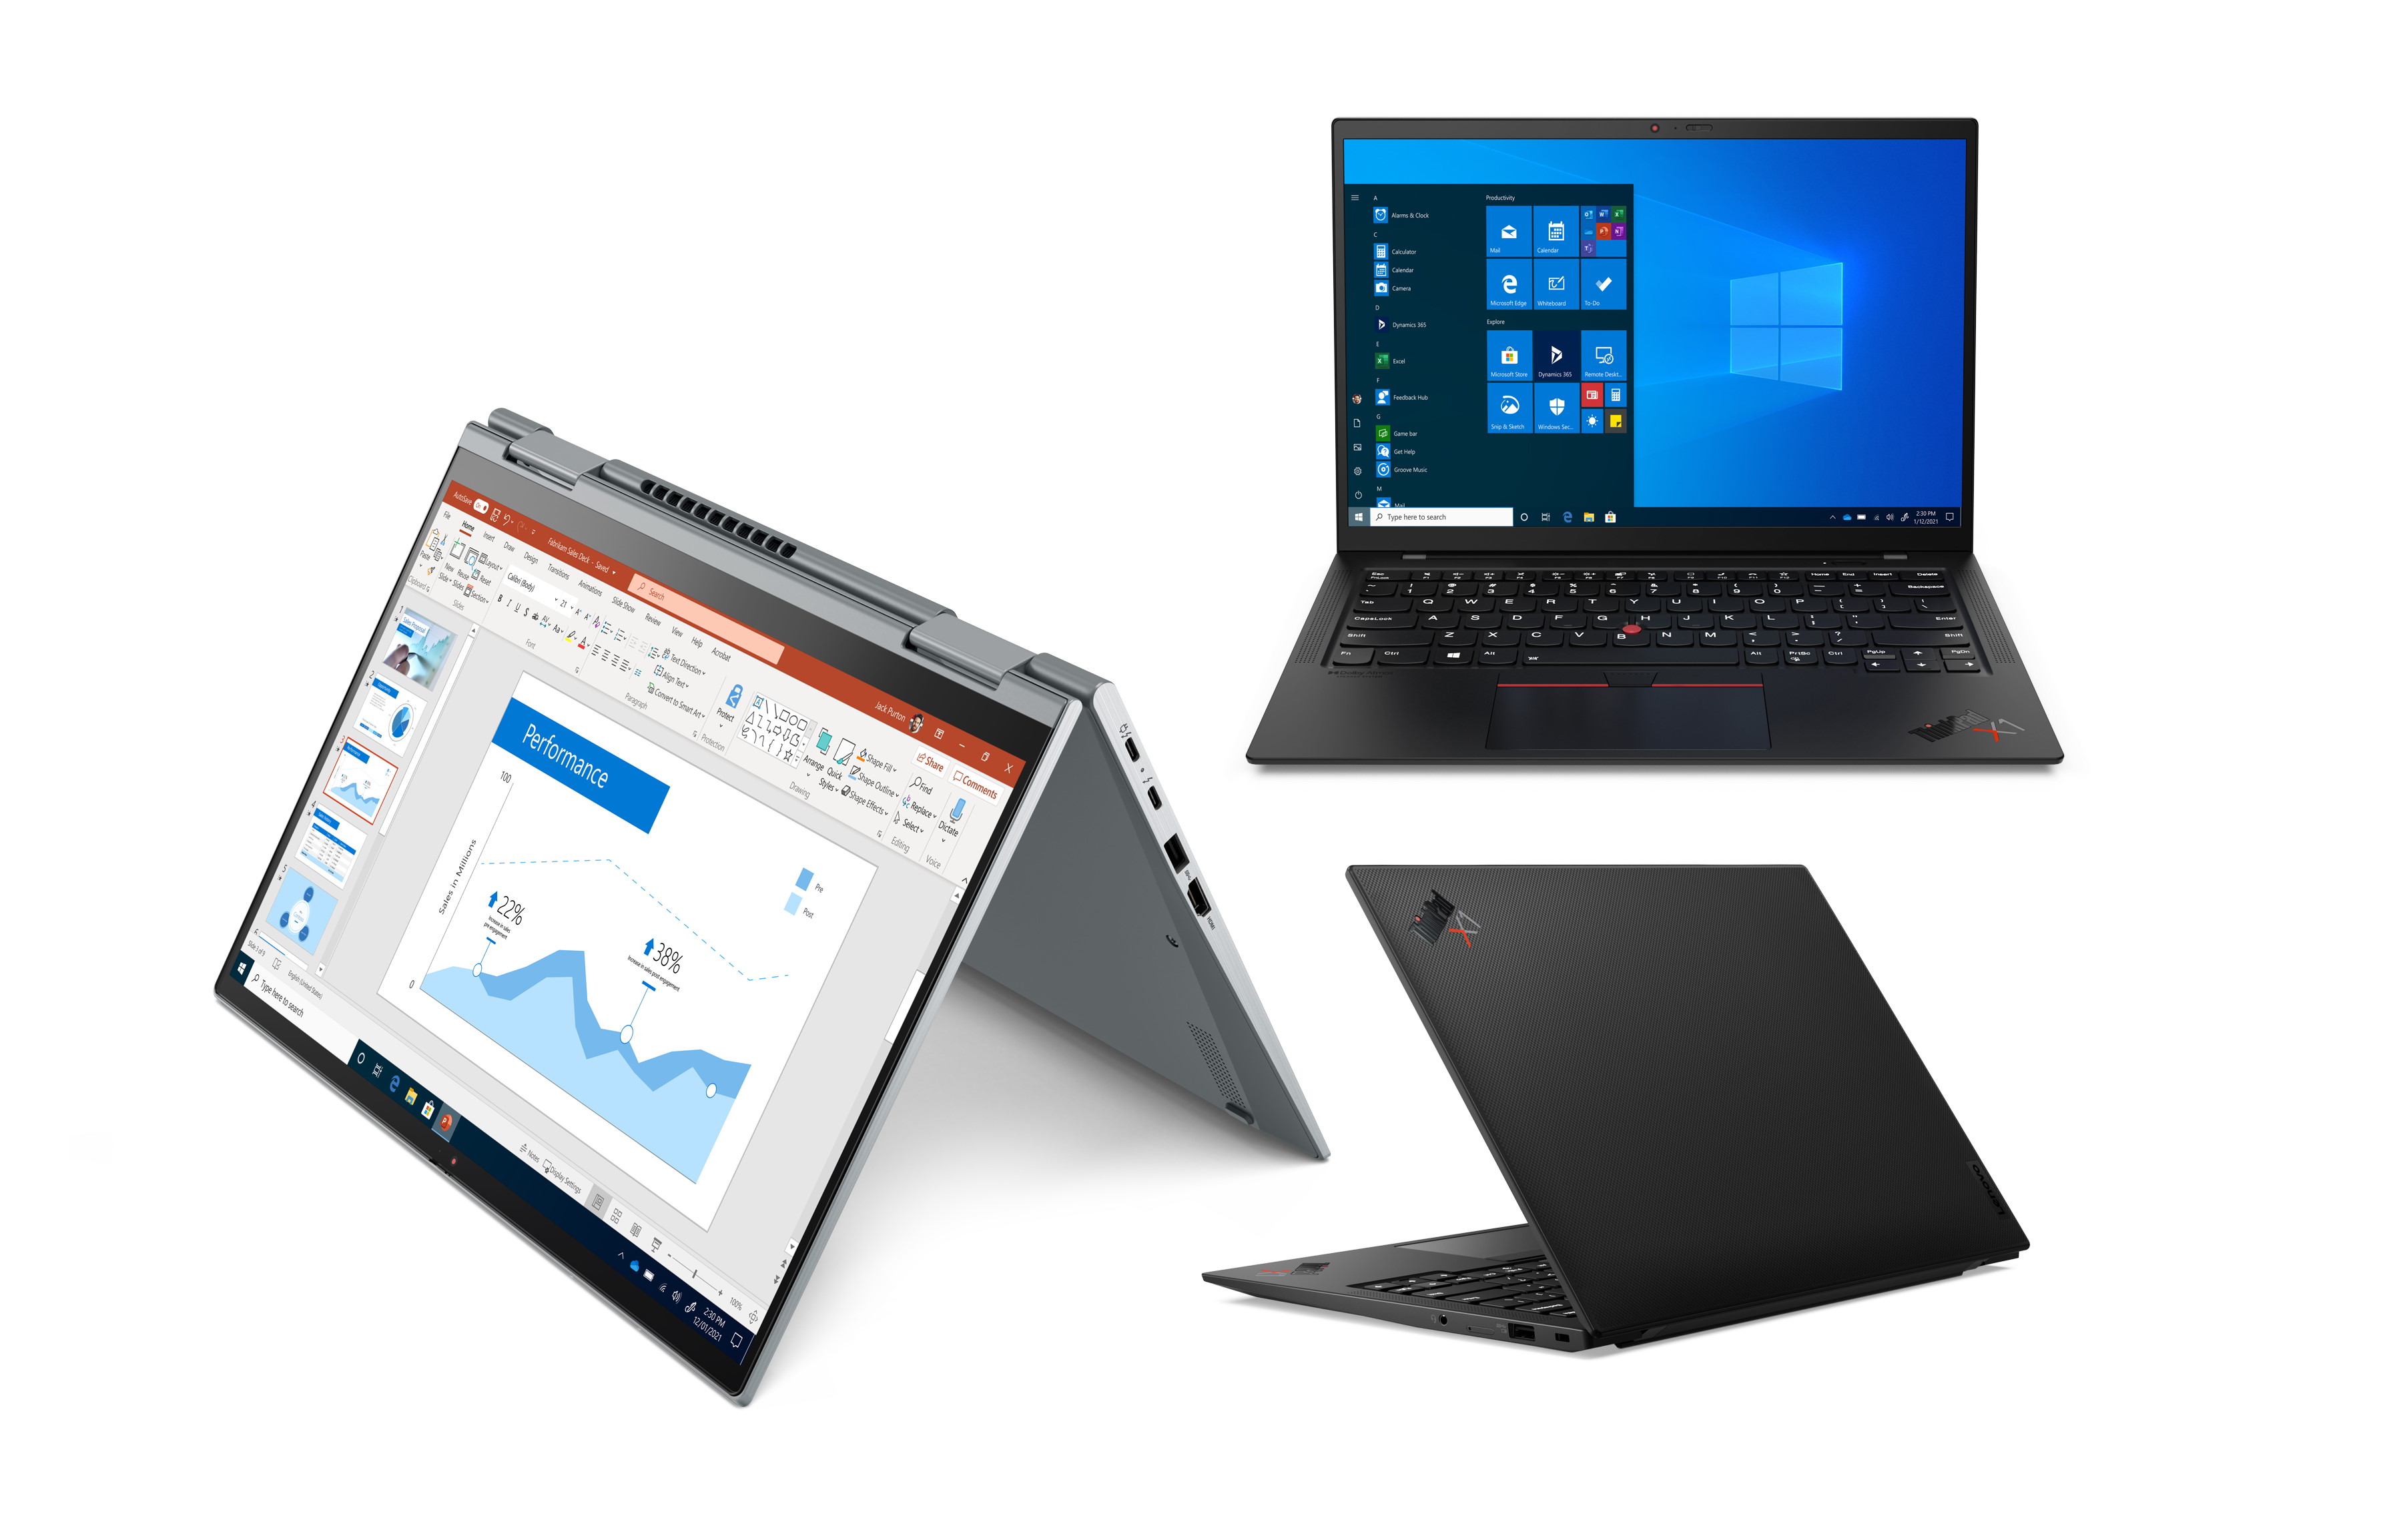 Lenovo ThinkPad X1 Carbon Gen 9 and X1 Yoga Gen 6 get a big 16:10 redesign